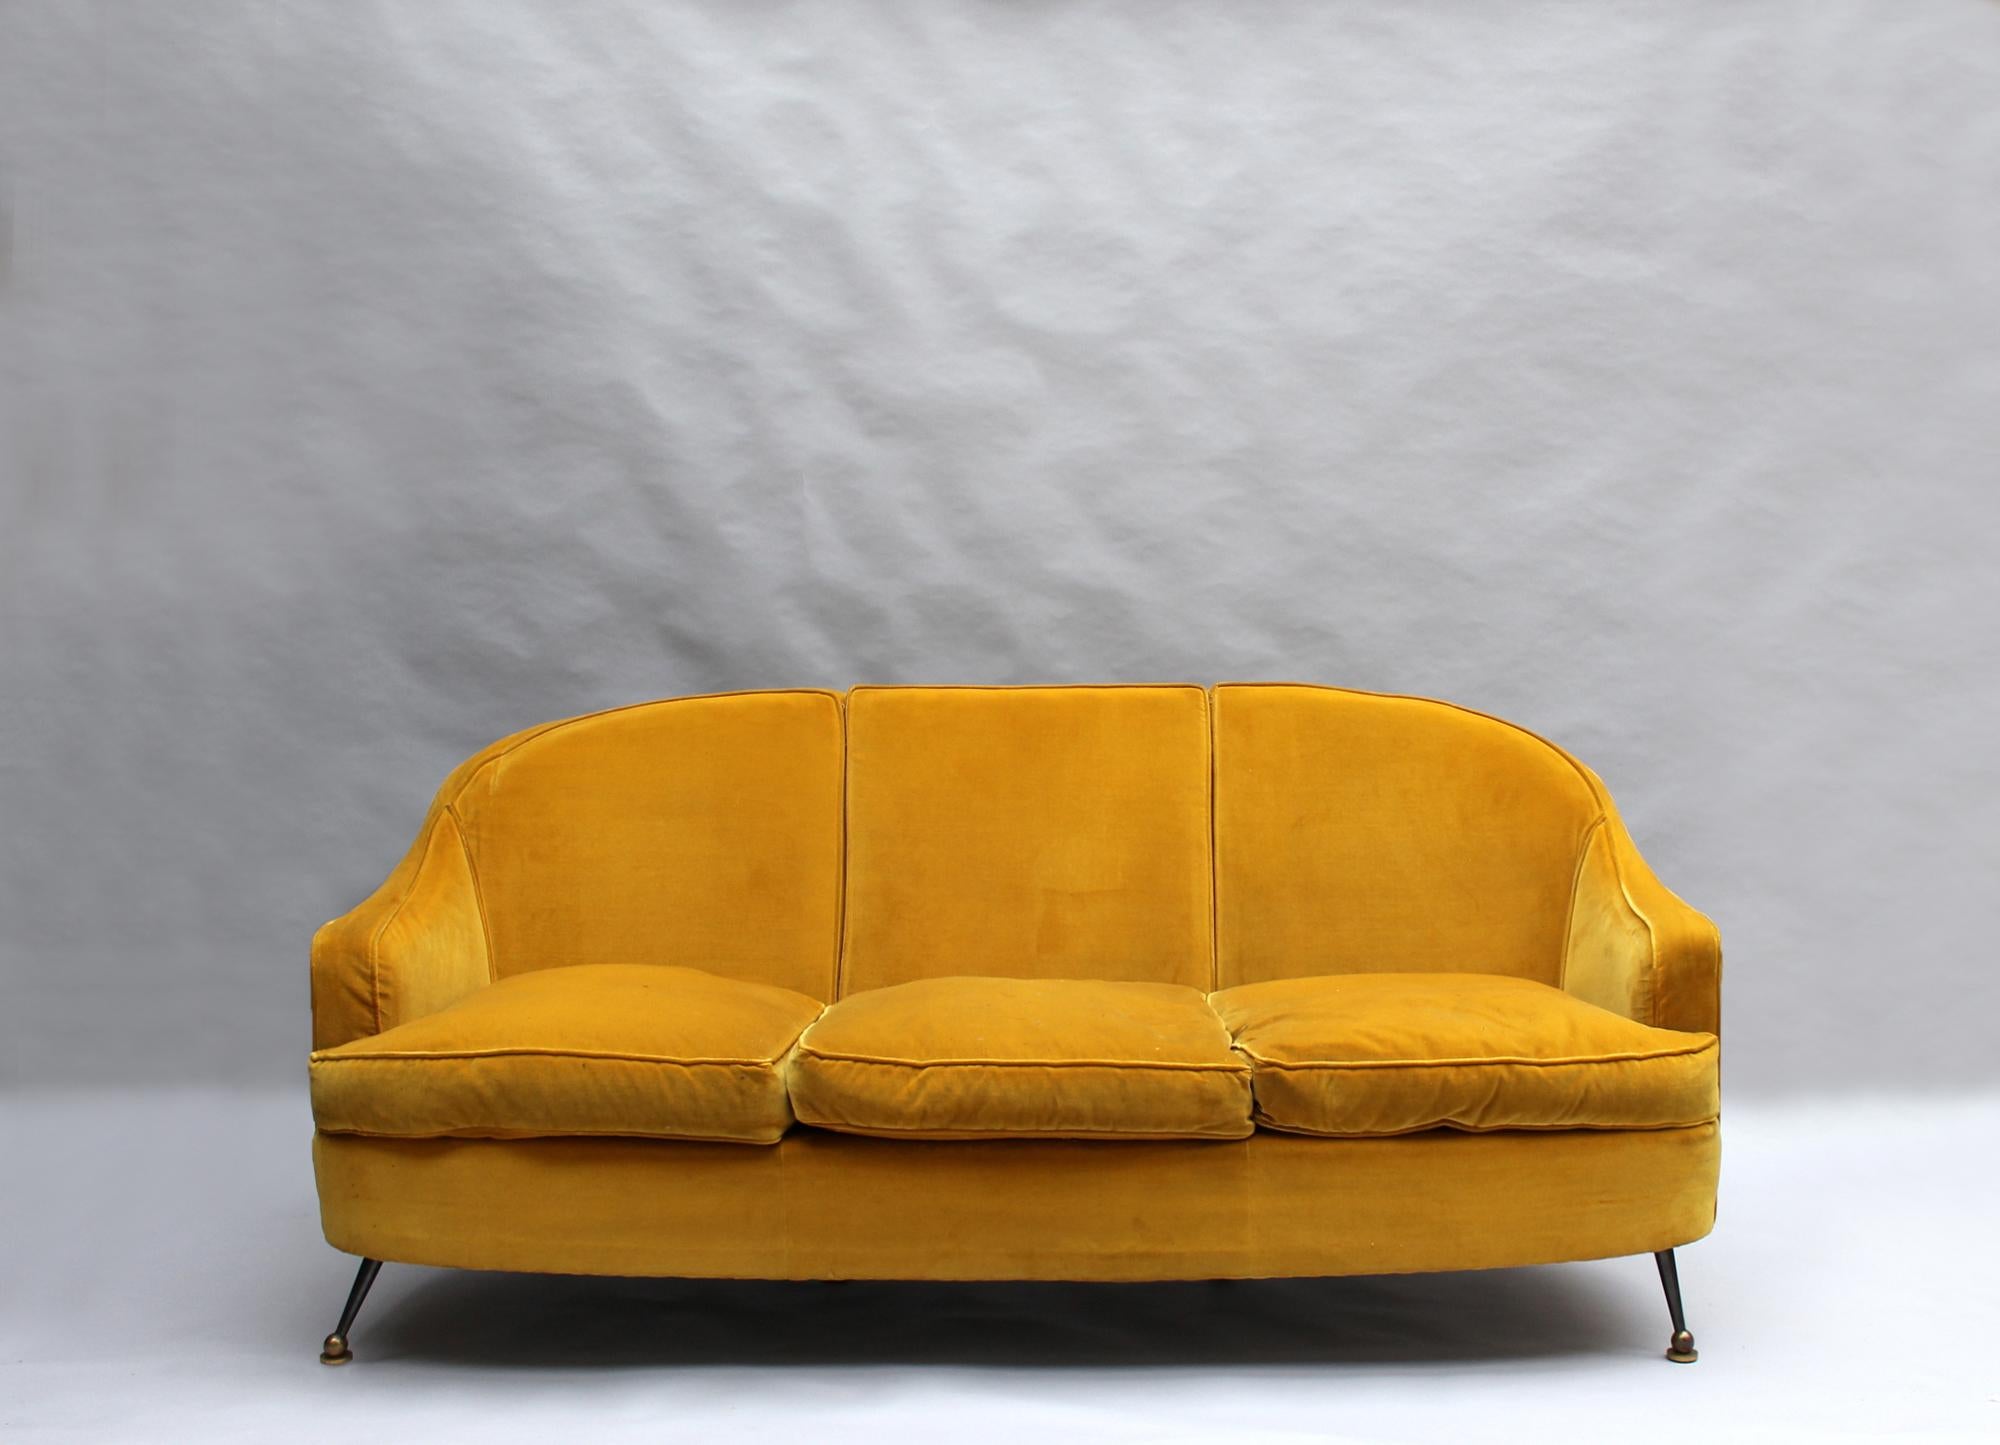 Maison Leleu - A fine French 1960s three-seat sofa with elegant brass and gunmetal legs.

Documentation:
Magazine 